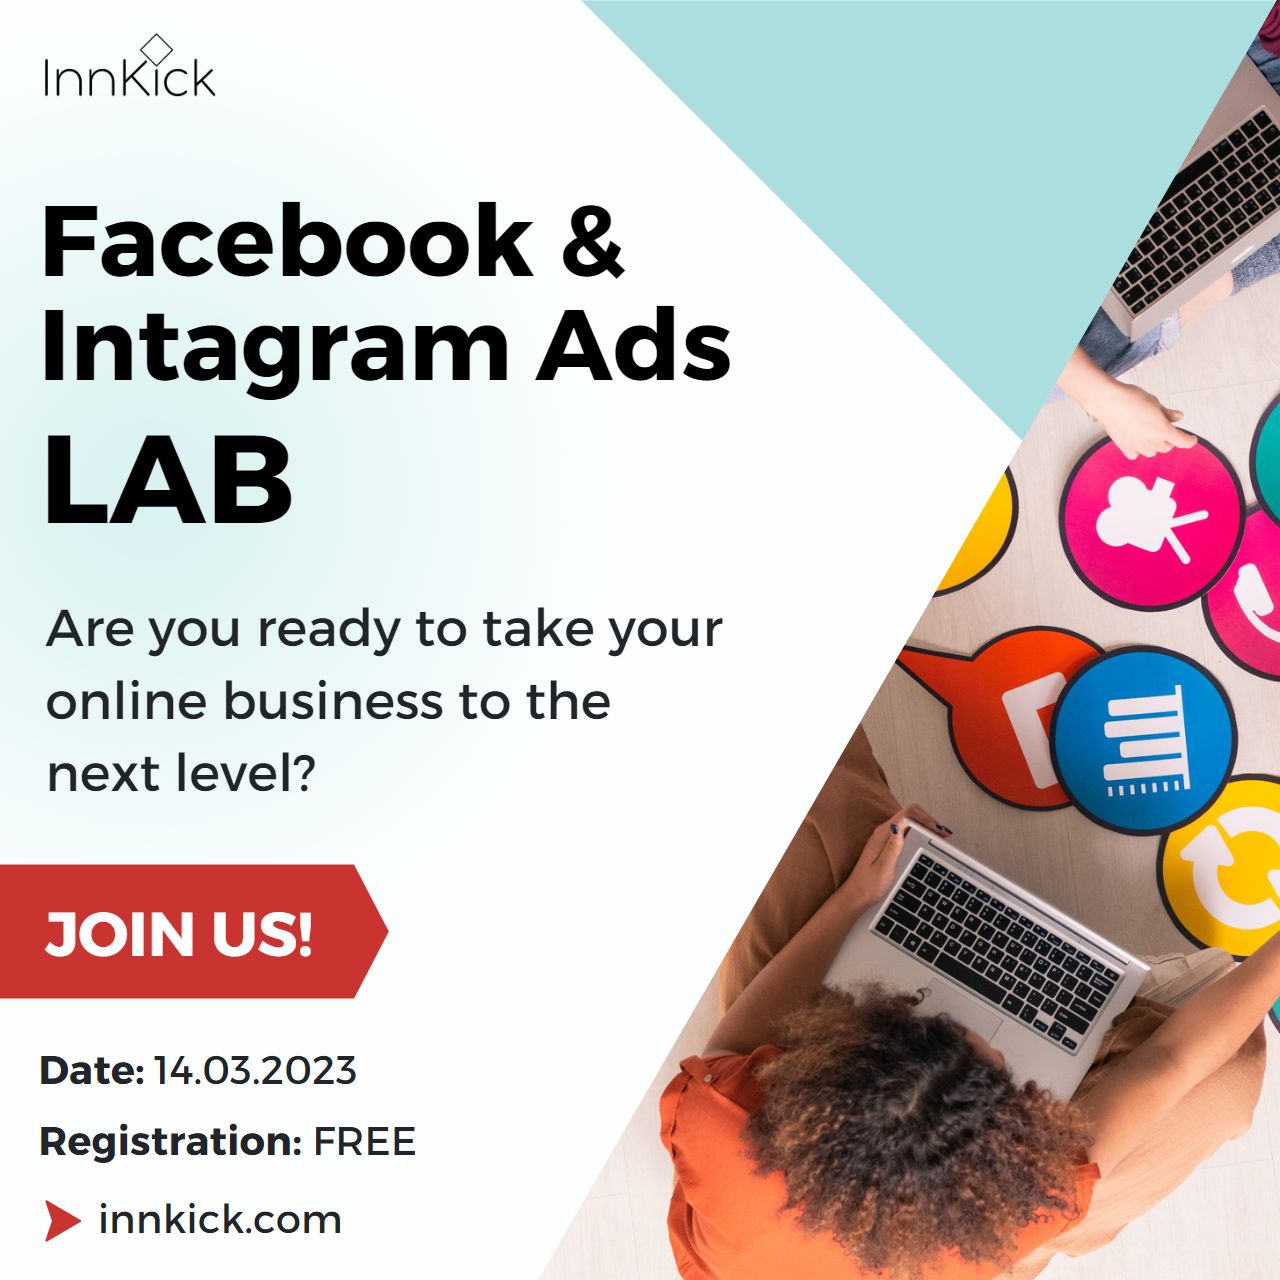 The Facebook & Instagram Ads Lab